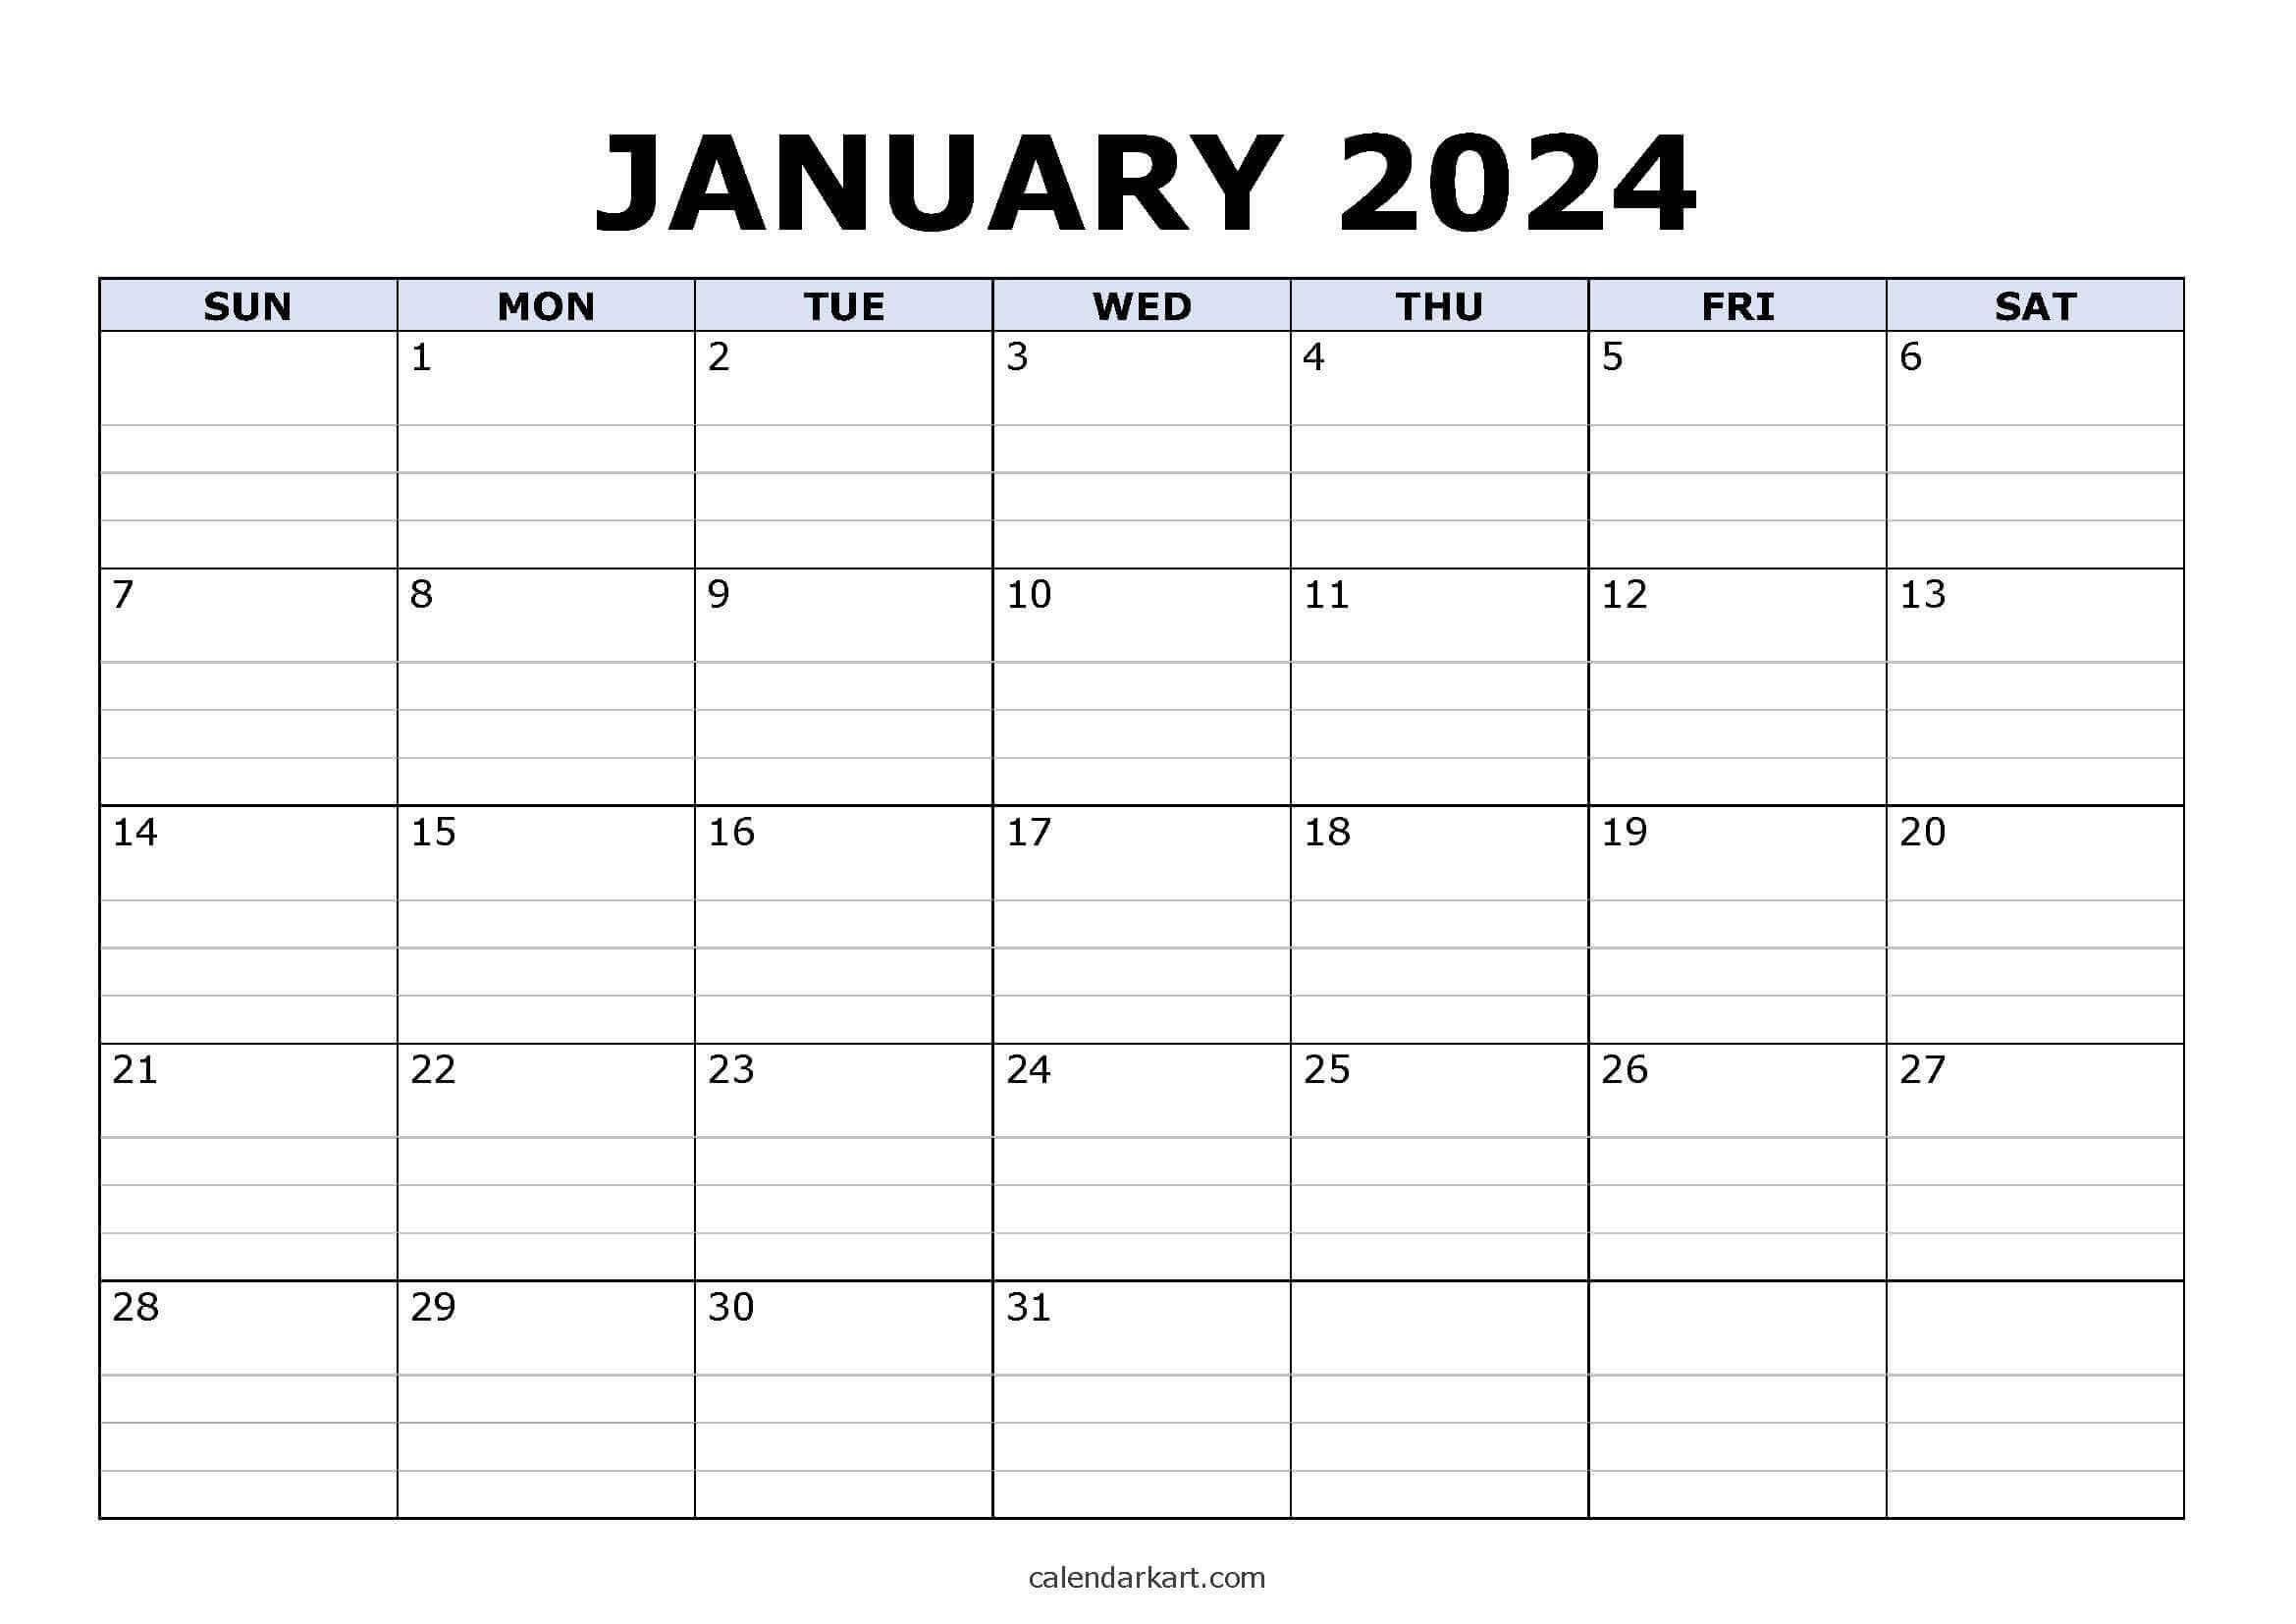 Free Printable January 2024 Calendars - Calendarkart | Free Printable Calendar 2024 With Lines